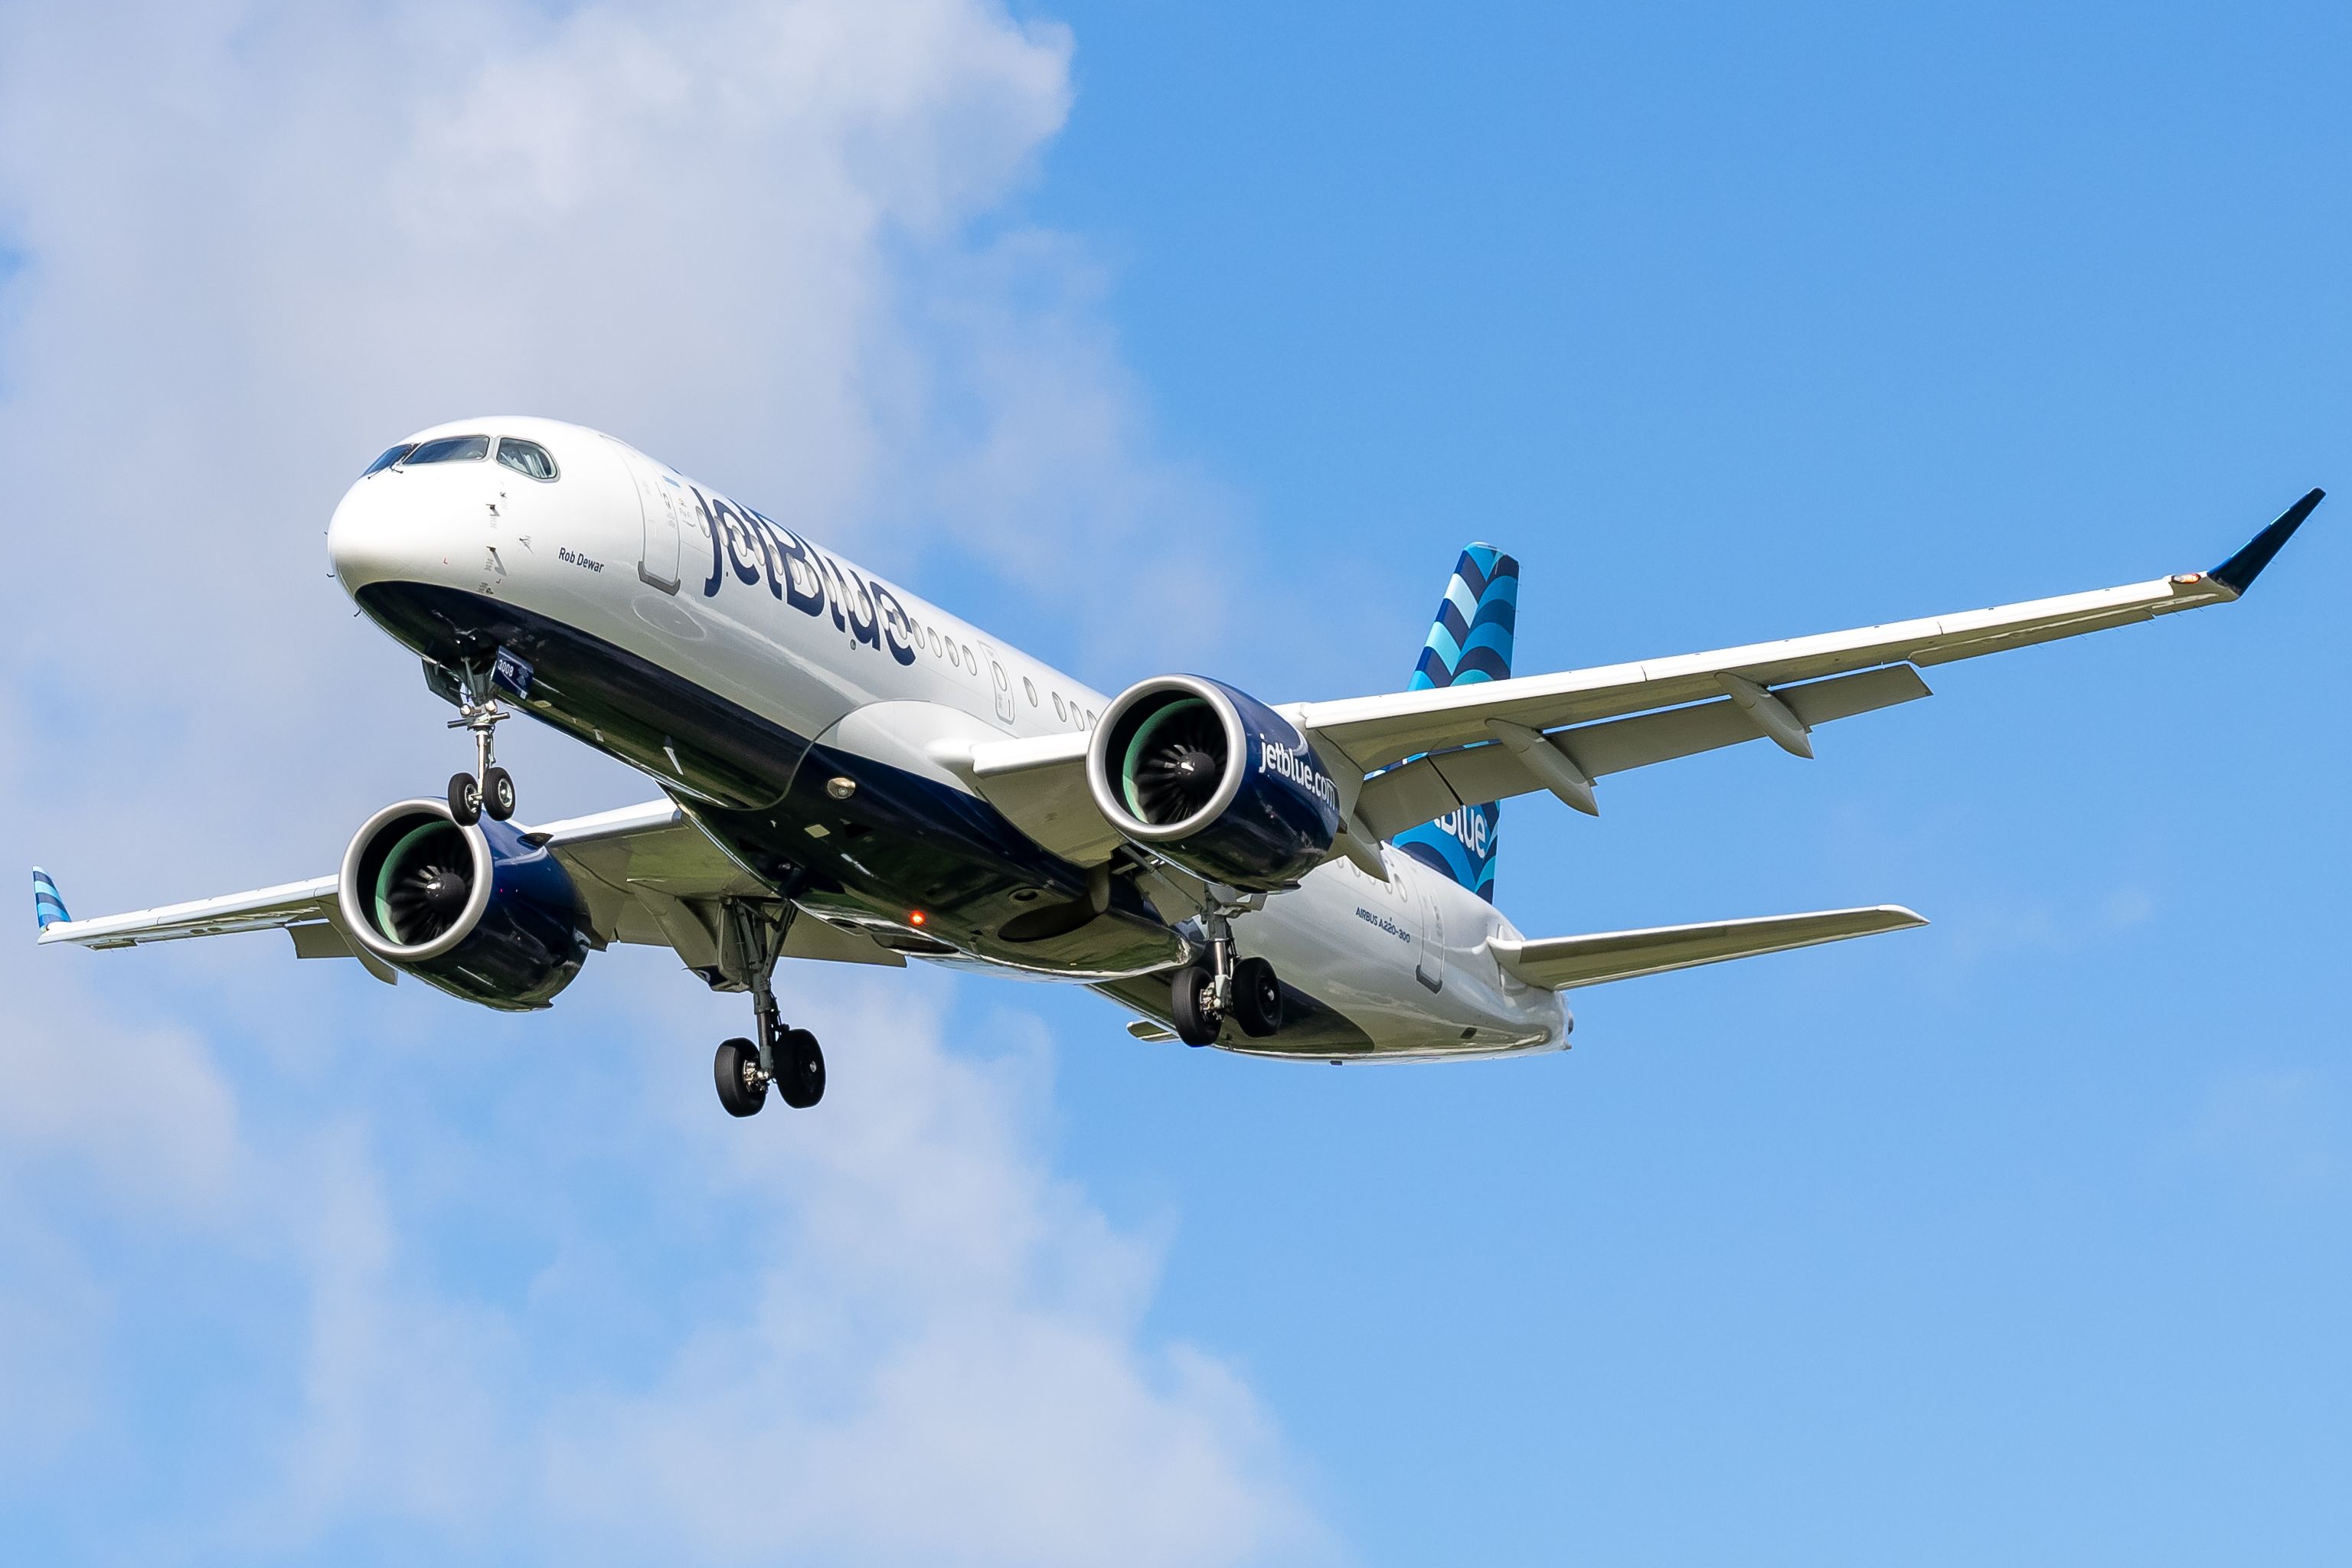 JetBlue Airways Airbus A220